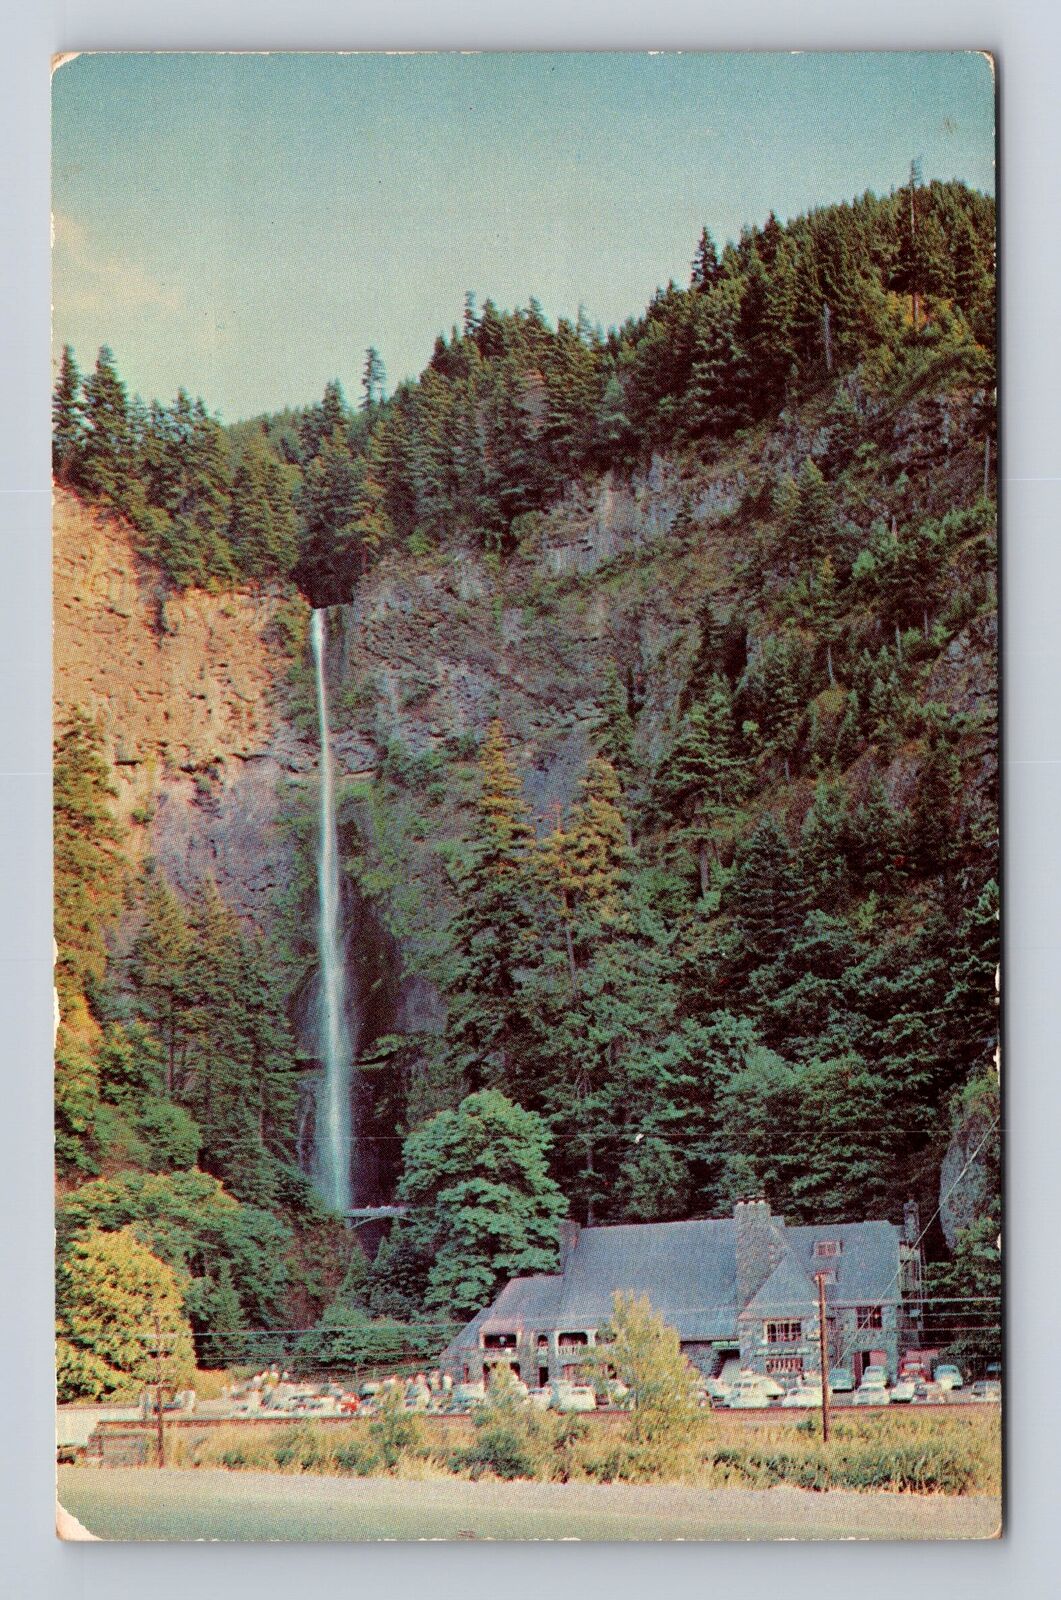 Multnomah Falls OR-Oregon, Multnoham Falls and Lodge, Vintage Souvenir Postcard